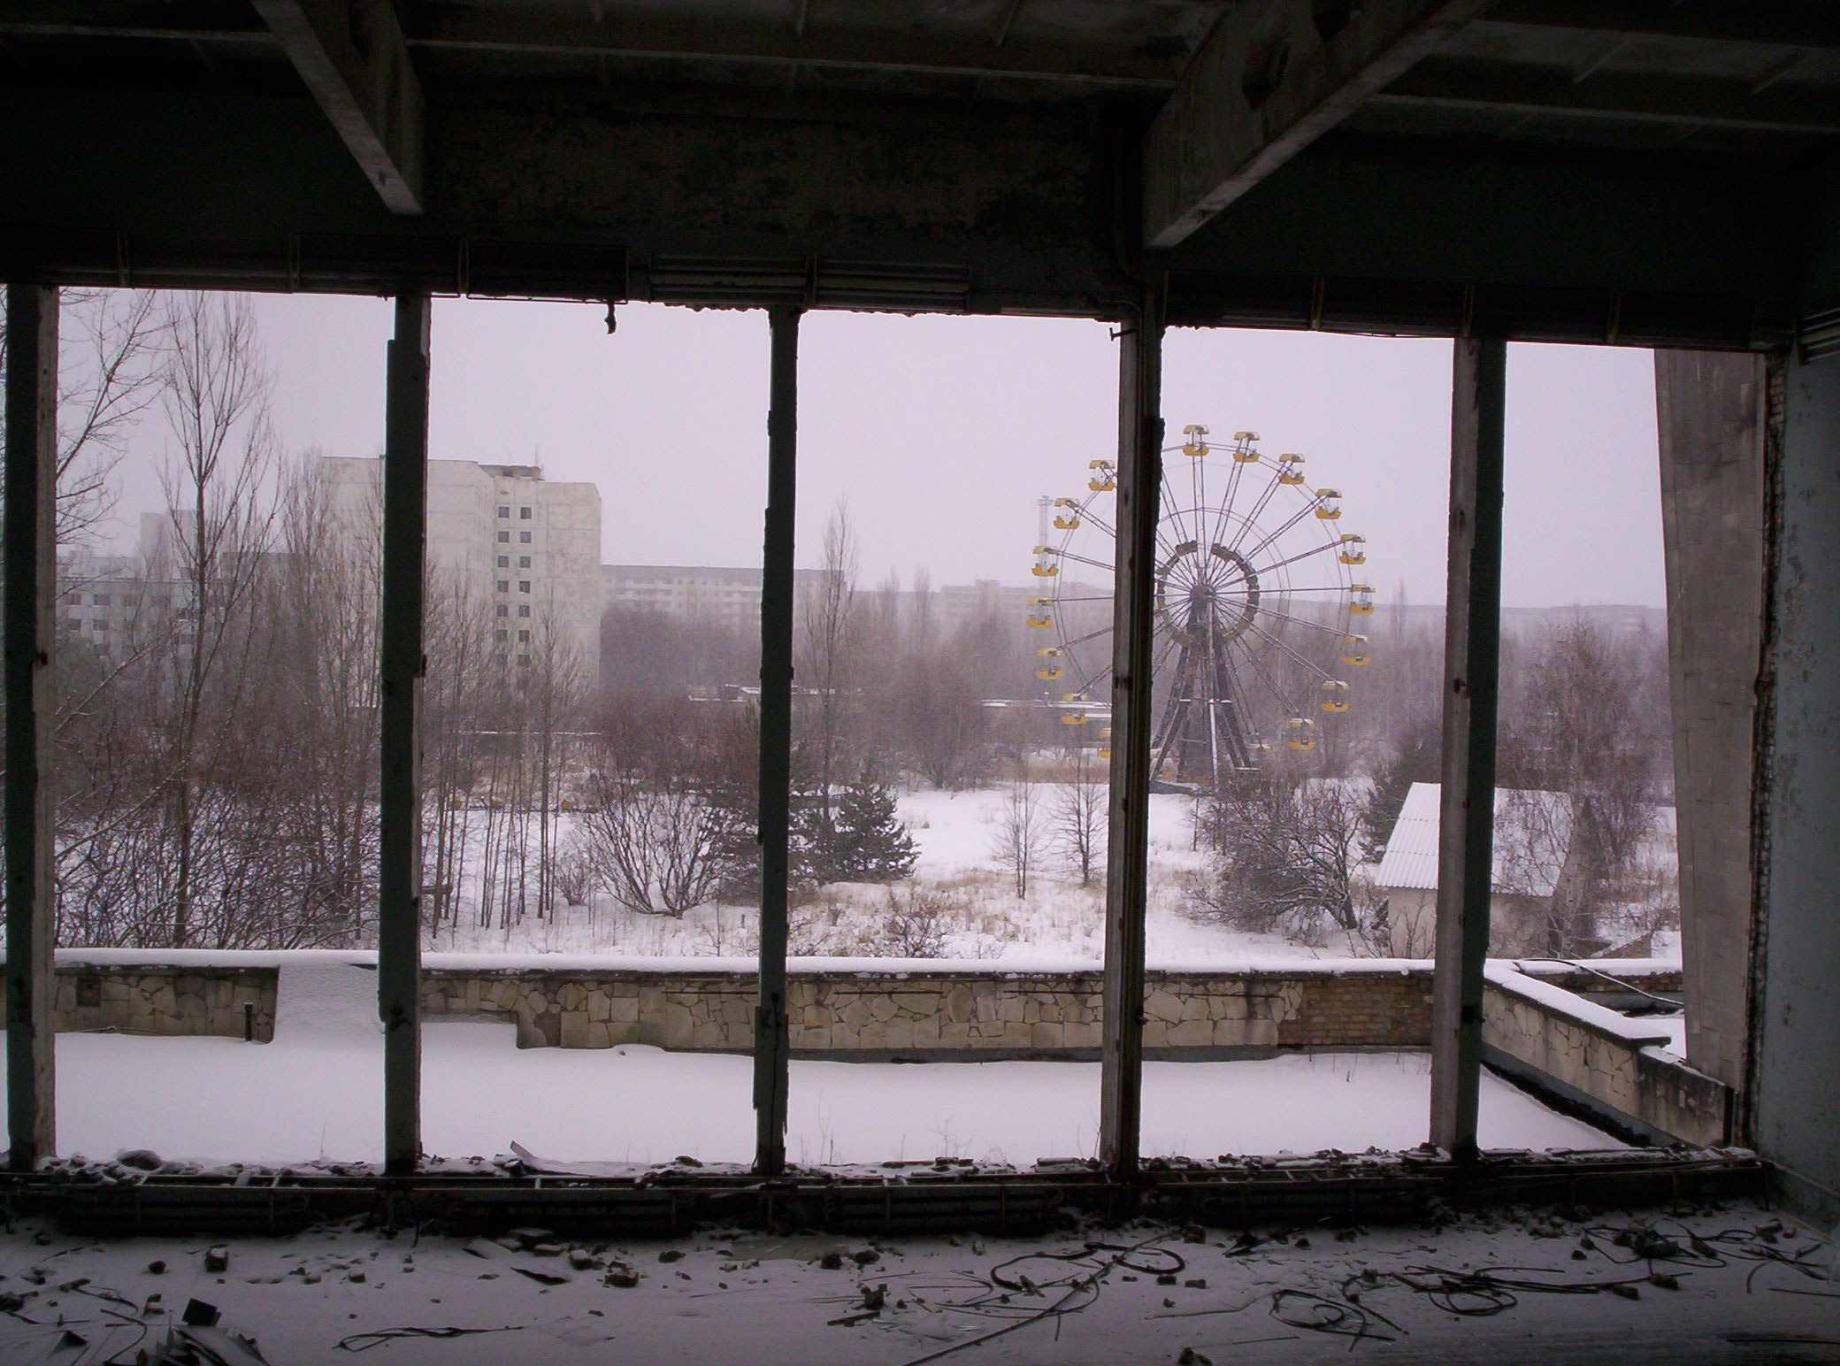 ferris wheel seen through windows of abandoned building